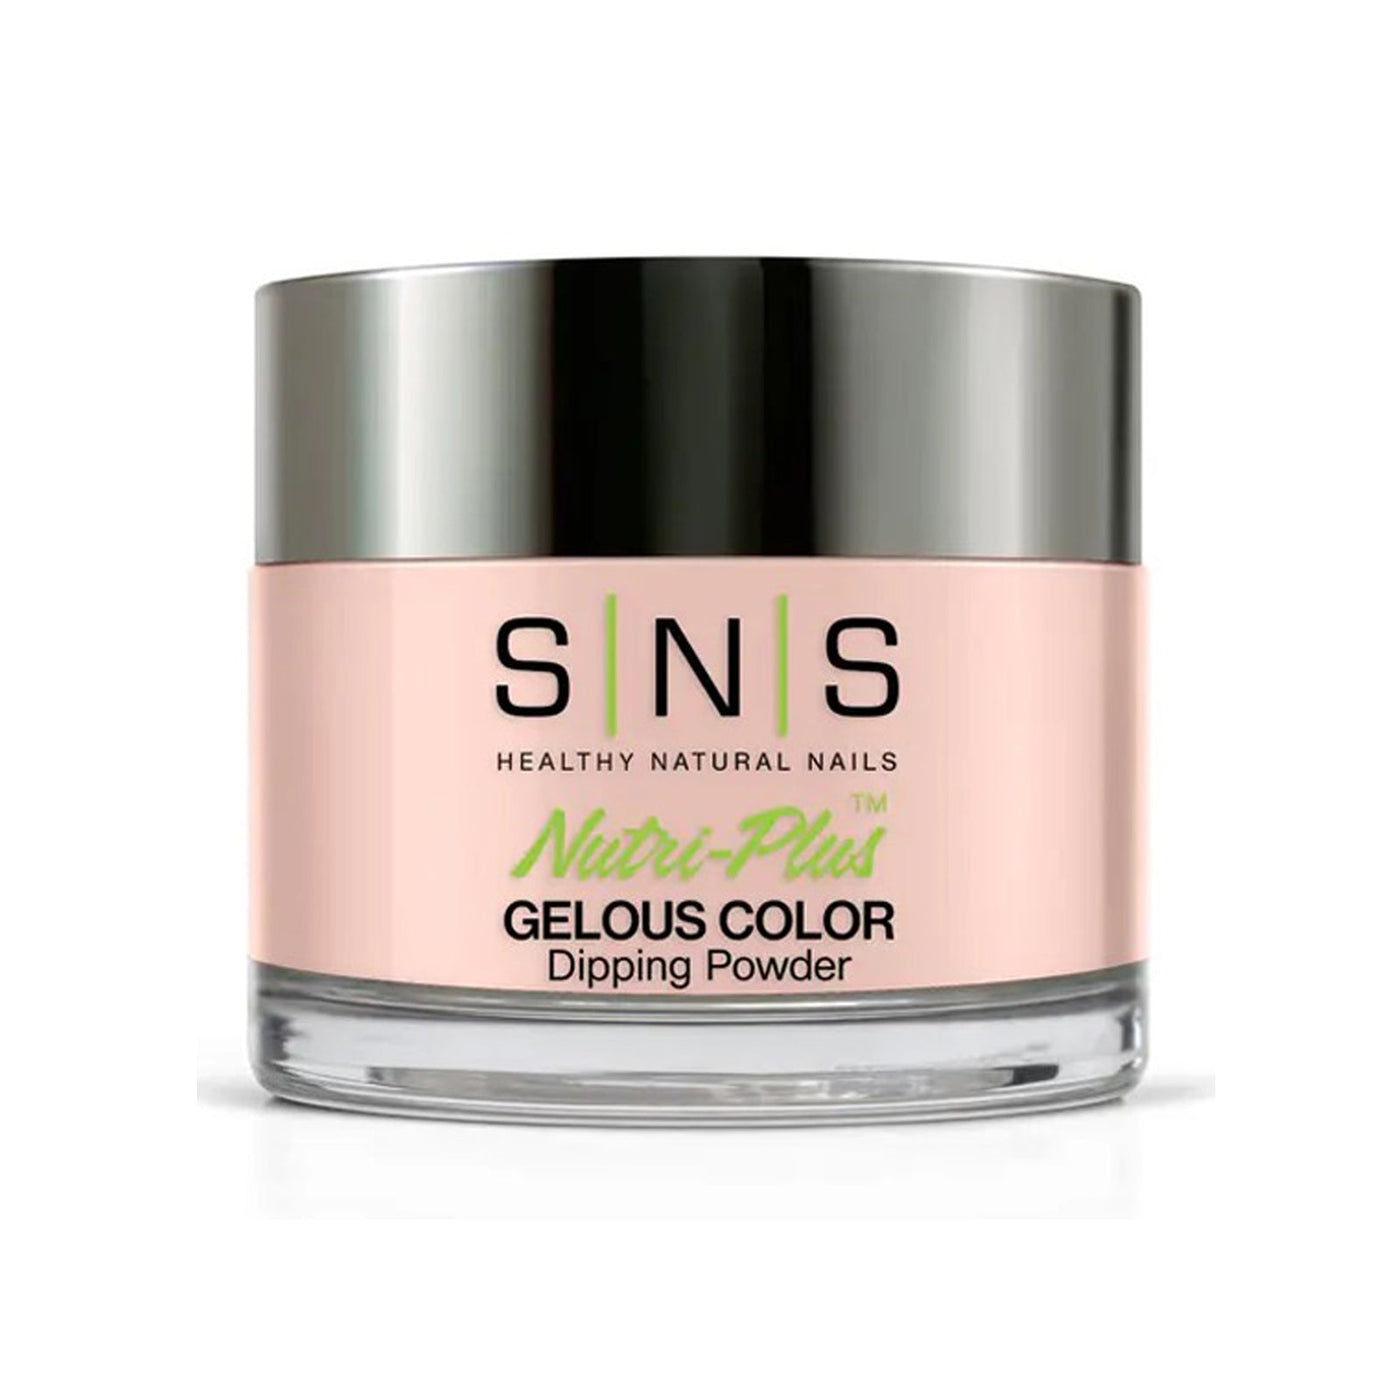 SNS Gelous Color Dipping Powder SL03 Scintillating Silk (43g) packaging